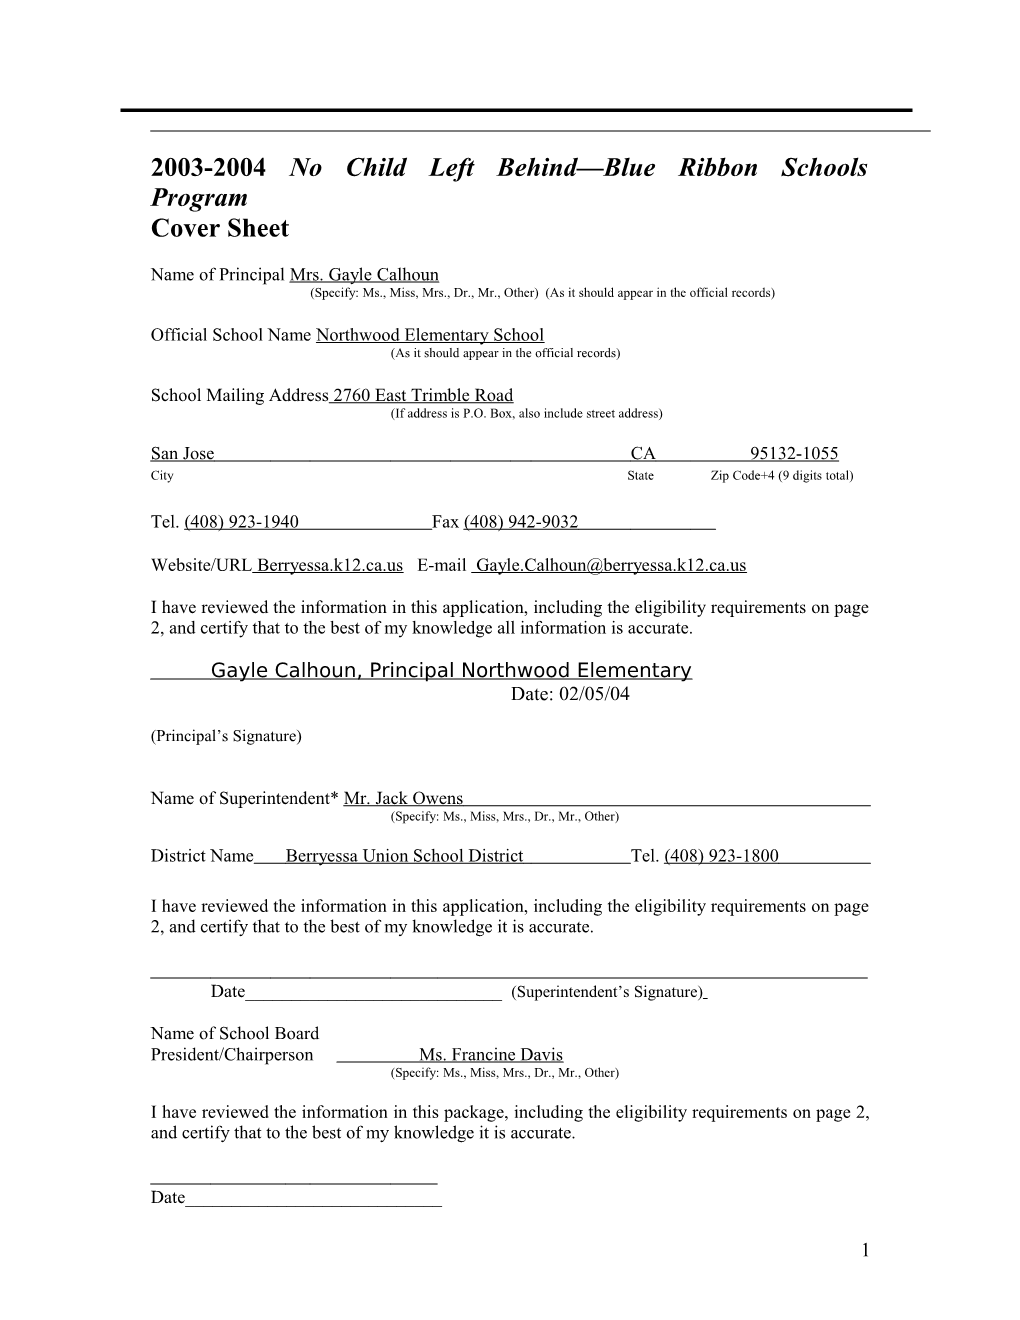 Northwood Elementary School 2004 No Child Left Behind-Blue Ribbon School Application (Msword)